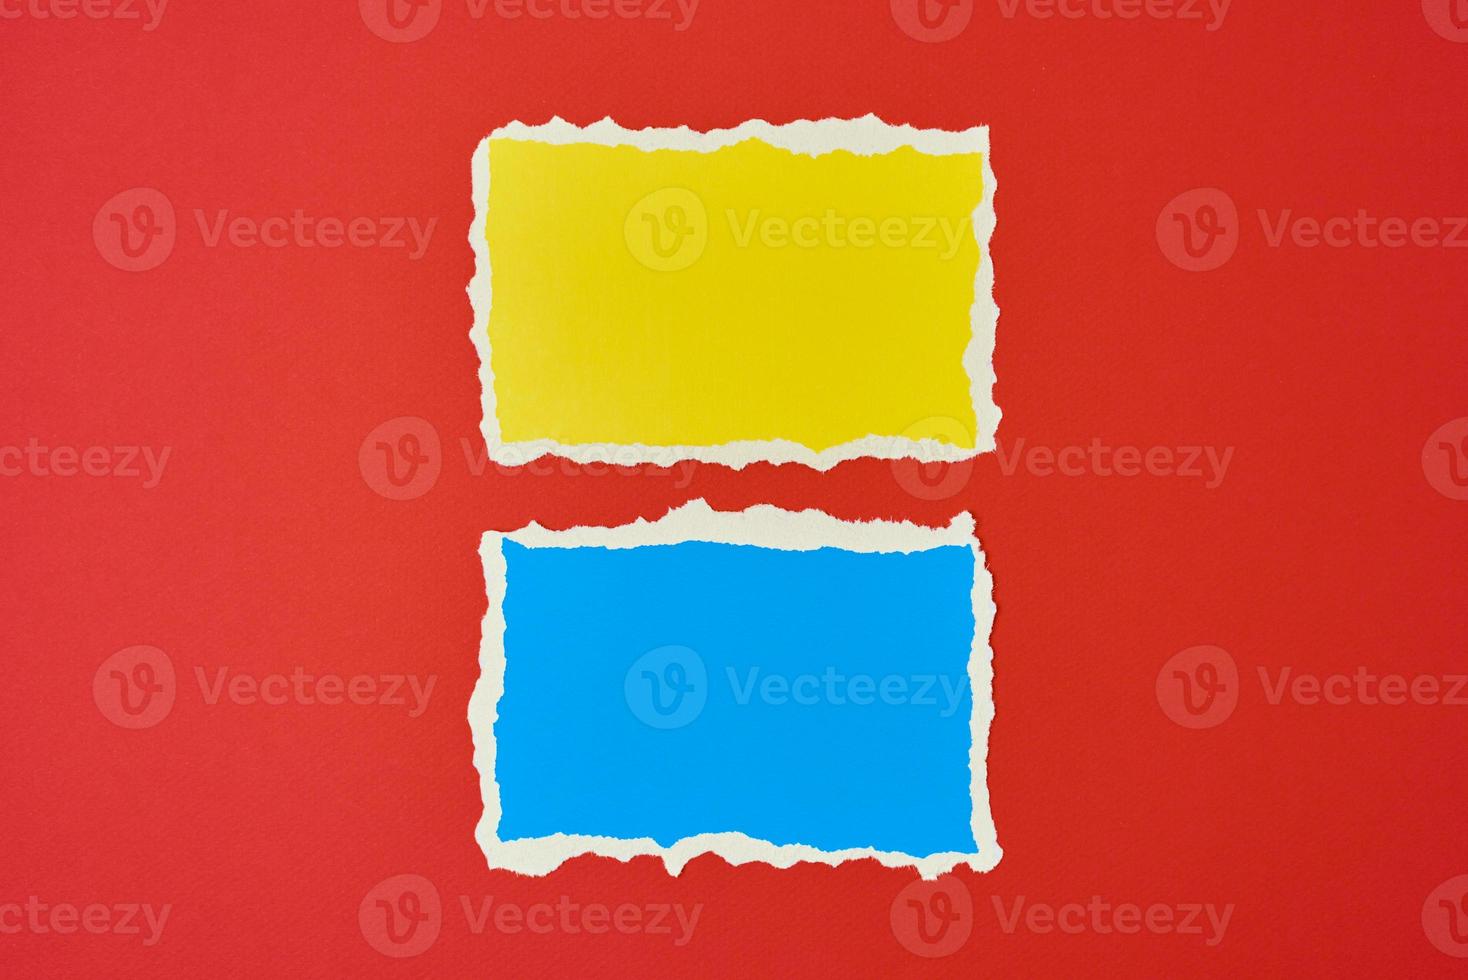 två rev papper trasig kant ark på en röd bakgrund. foto